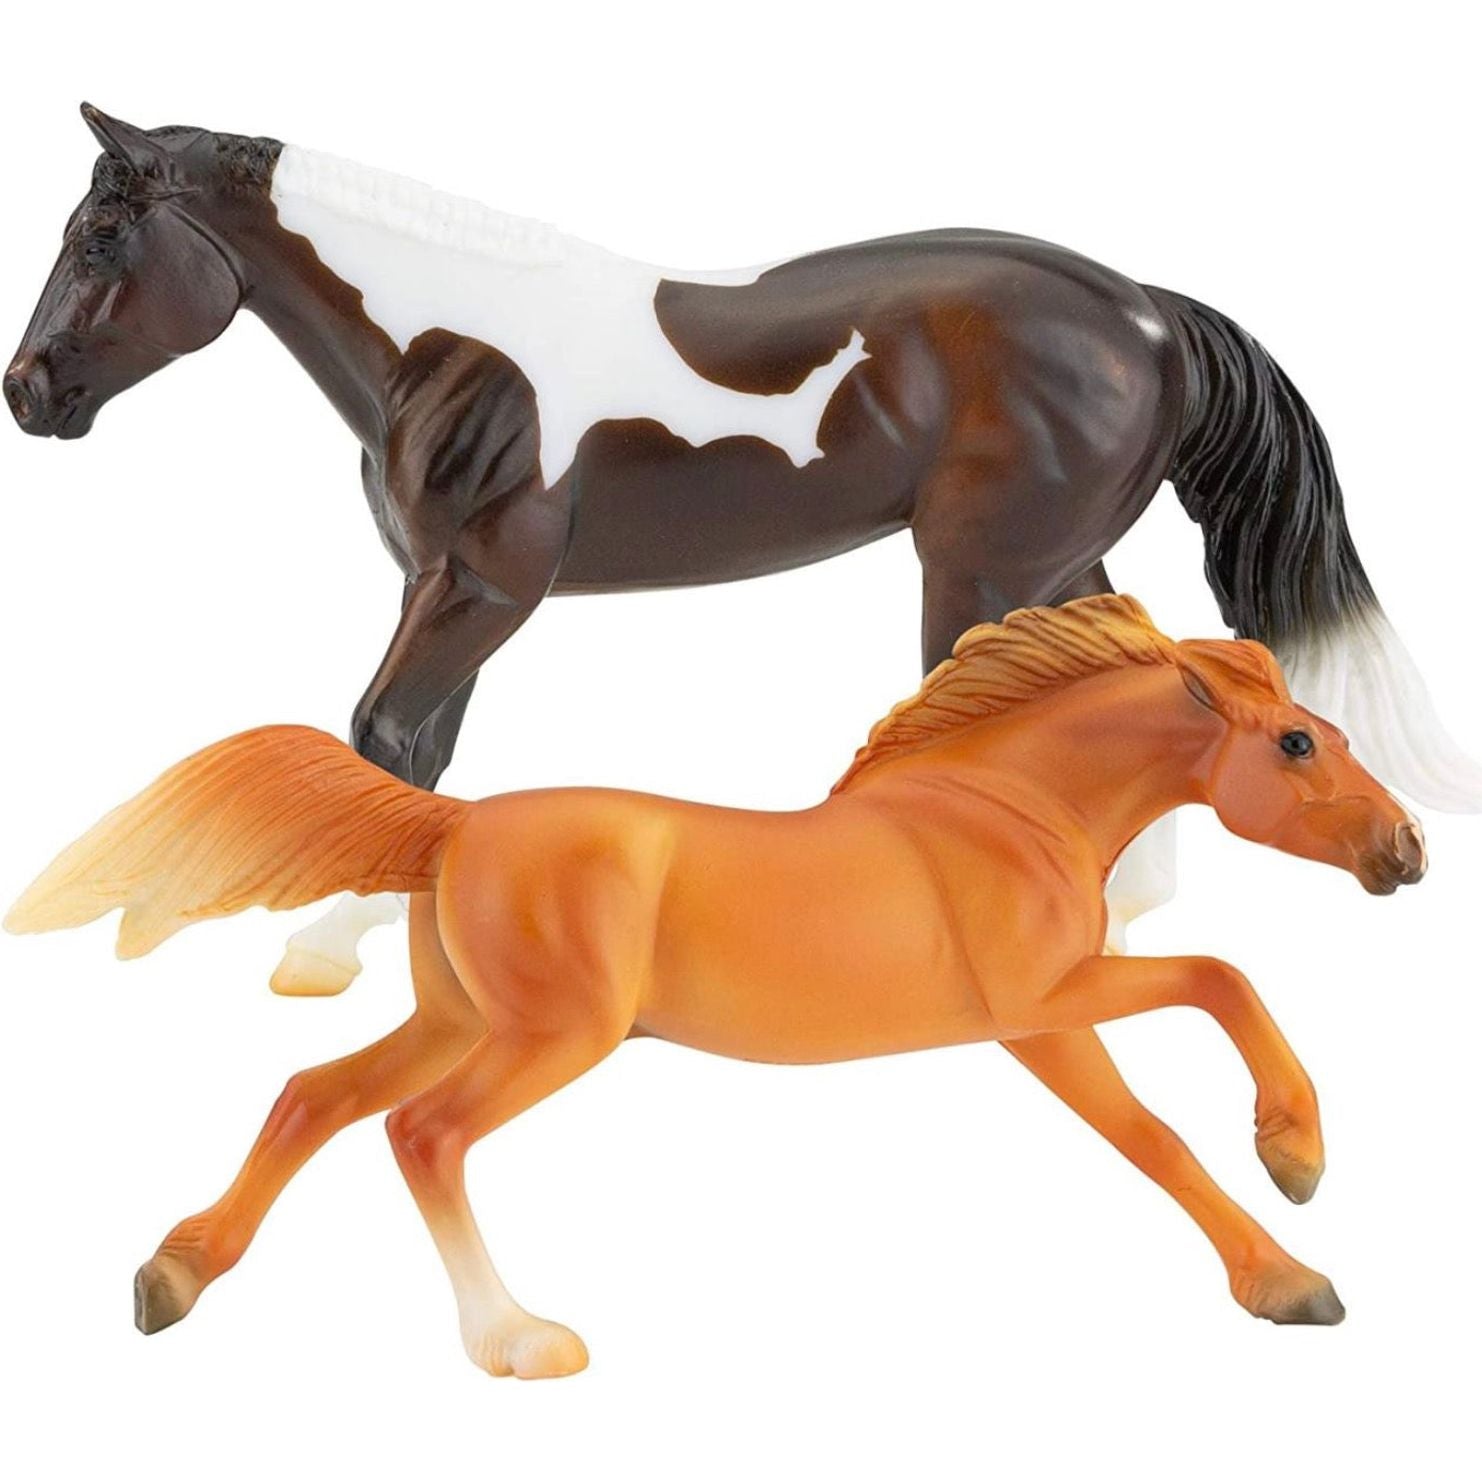 Horse Club (Animal figurines & Play Sets)